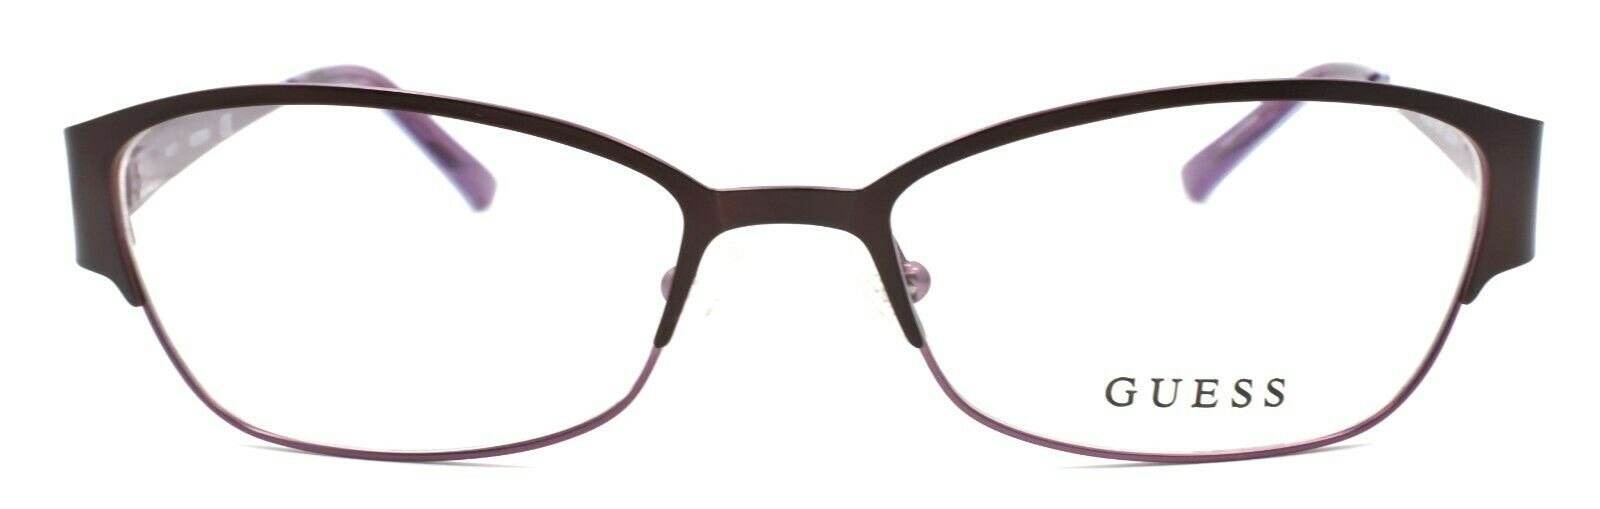 2-GUESS GU2329 PUR Women's Eyeglasses Frames 52-16-135 Purple + CASE-715583565692-IKSpecs